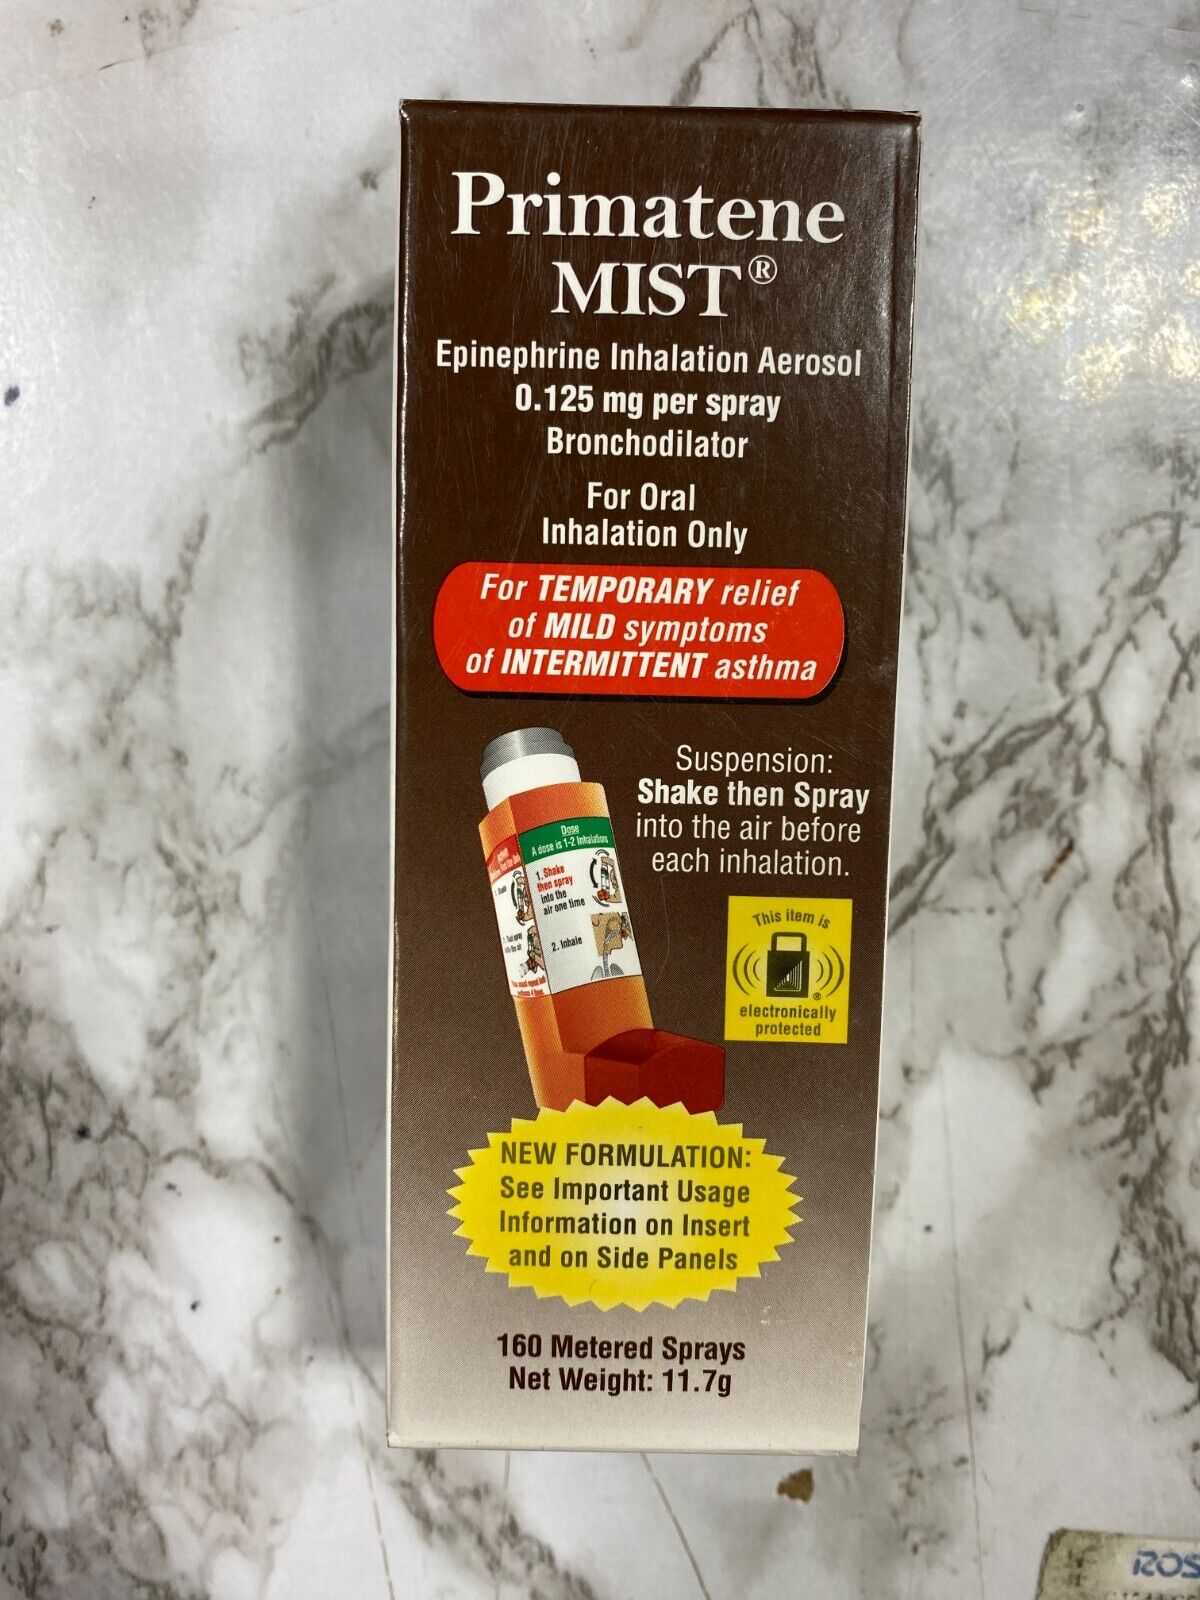 Primatene Mist Epinephrine Inhalation Aerosol 160 Sprays Expires JANUARY 2025